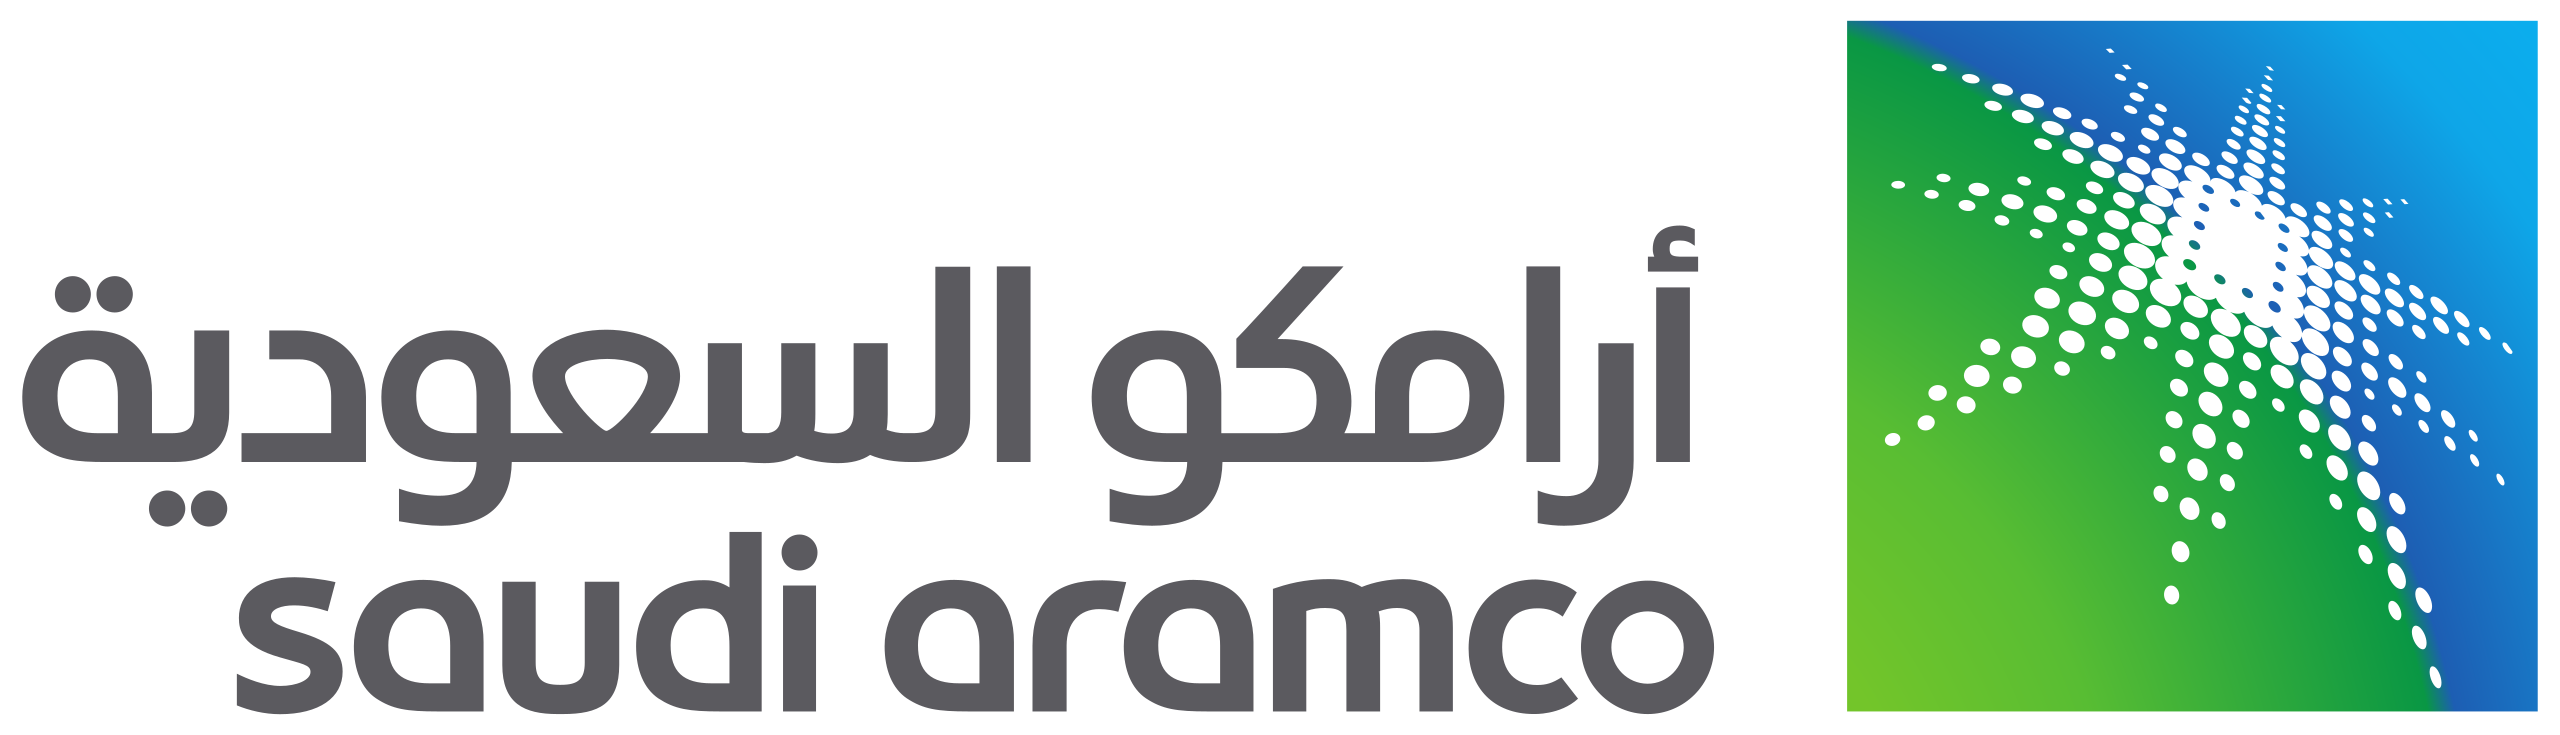 aramco wiki